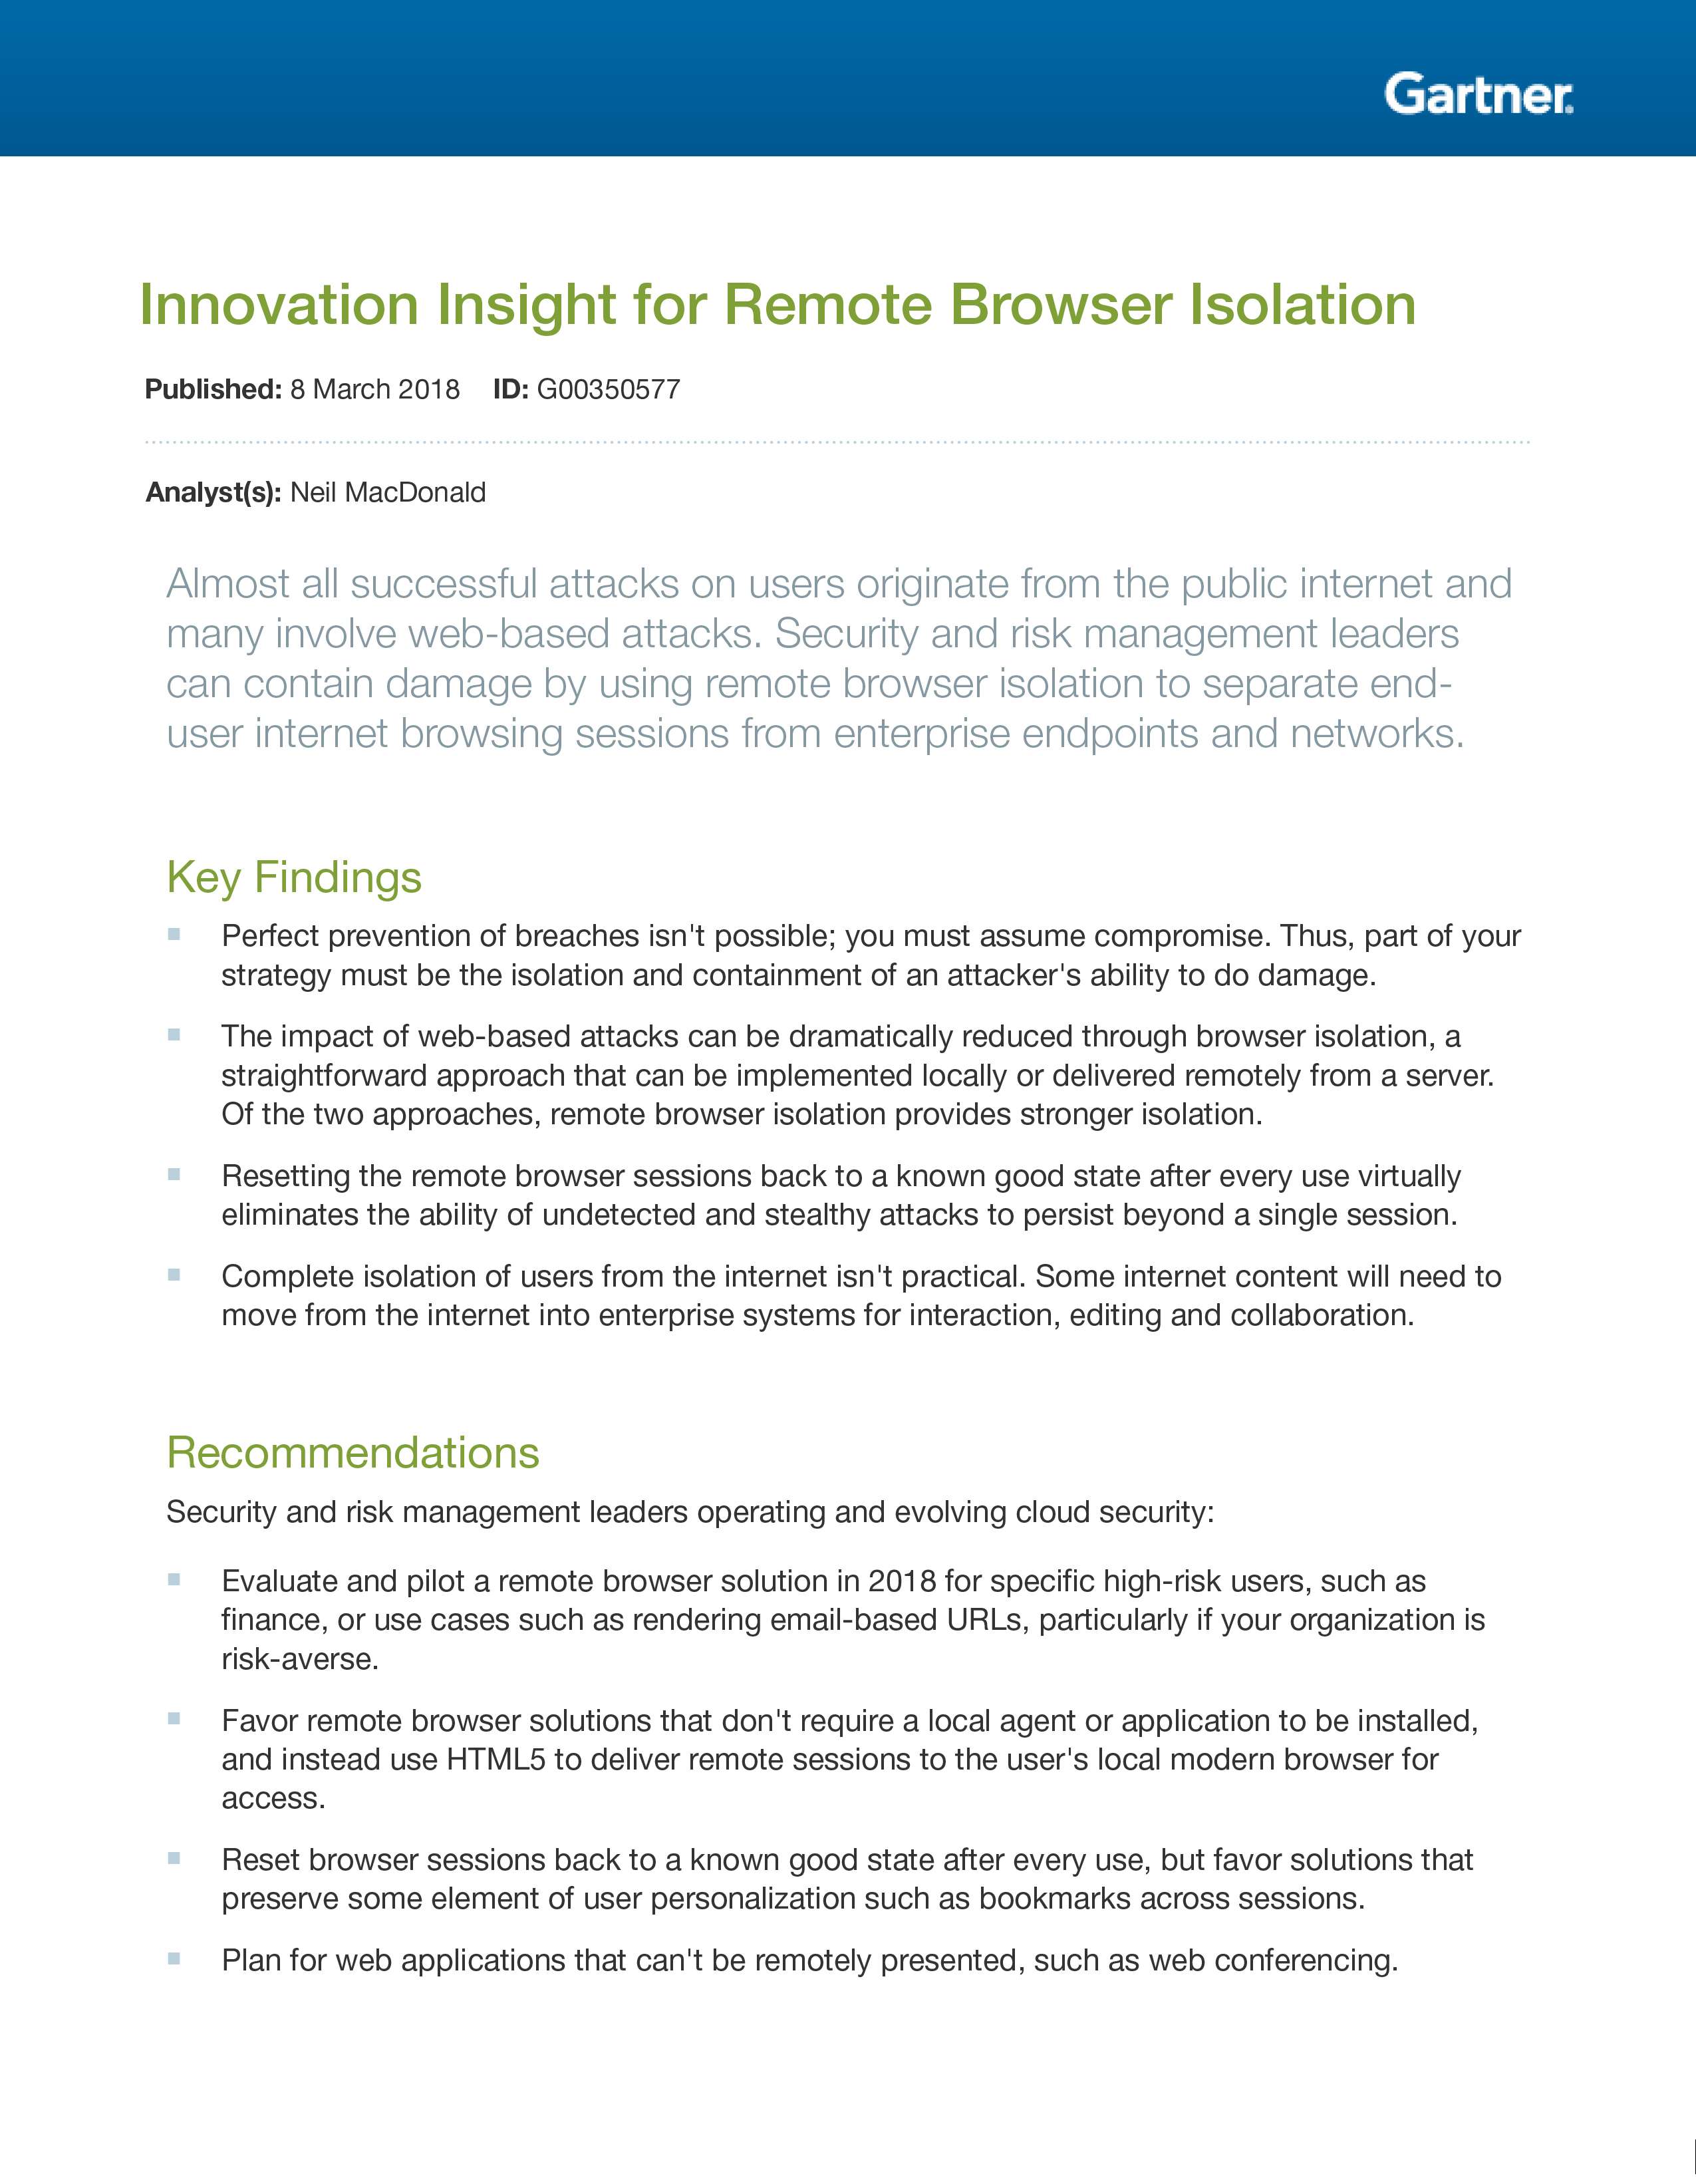 InnovationInsight Gartner Preview - Innovation Insight for Remote Browser Isolation